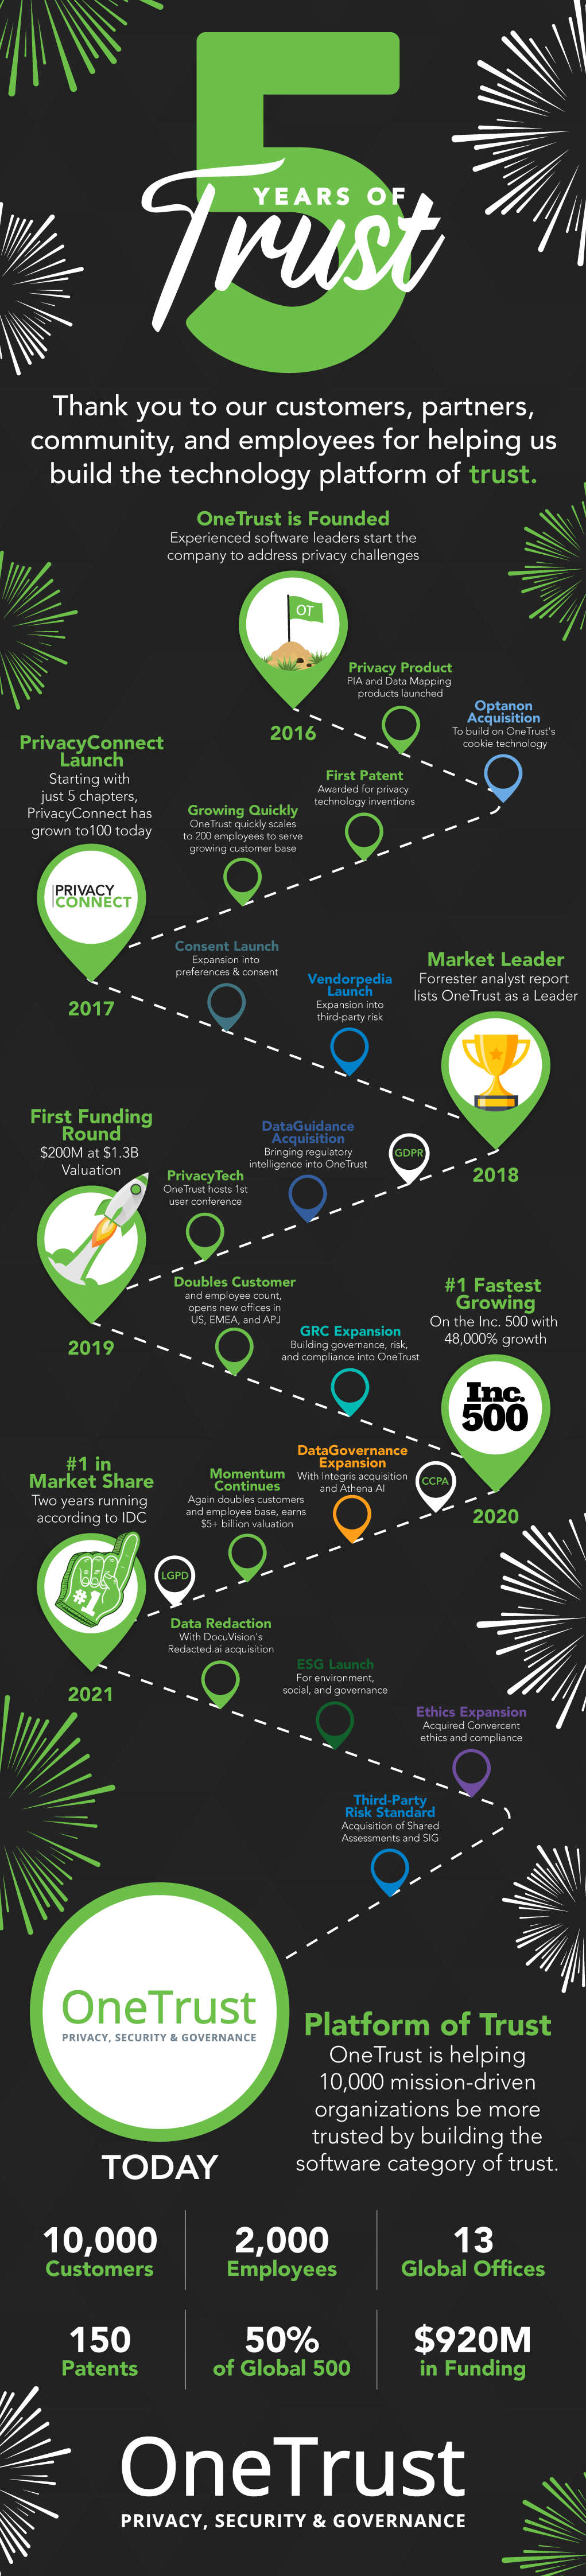 OneTrust 5 year anniversary infographic.